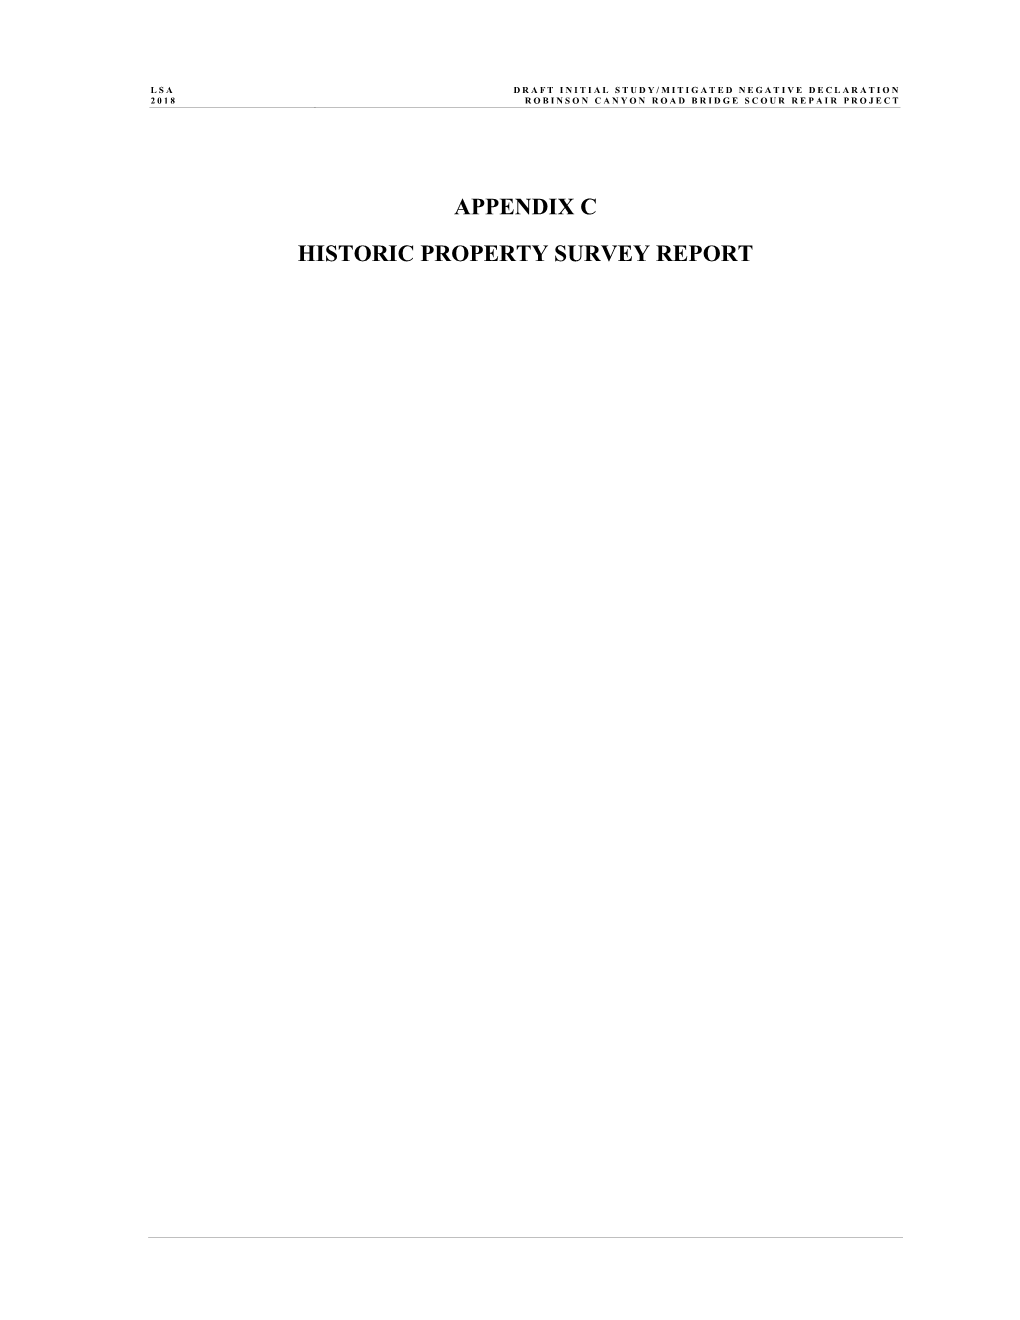 Appendix C Historic Property Survey Report